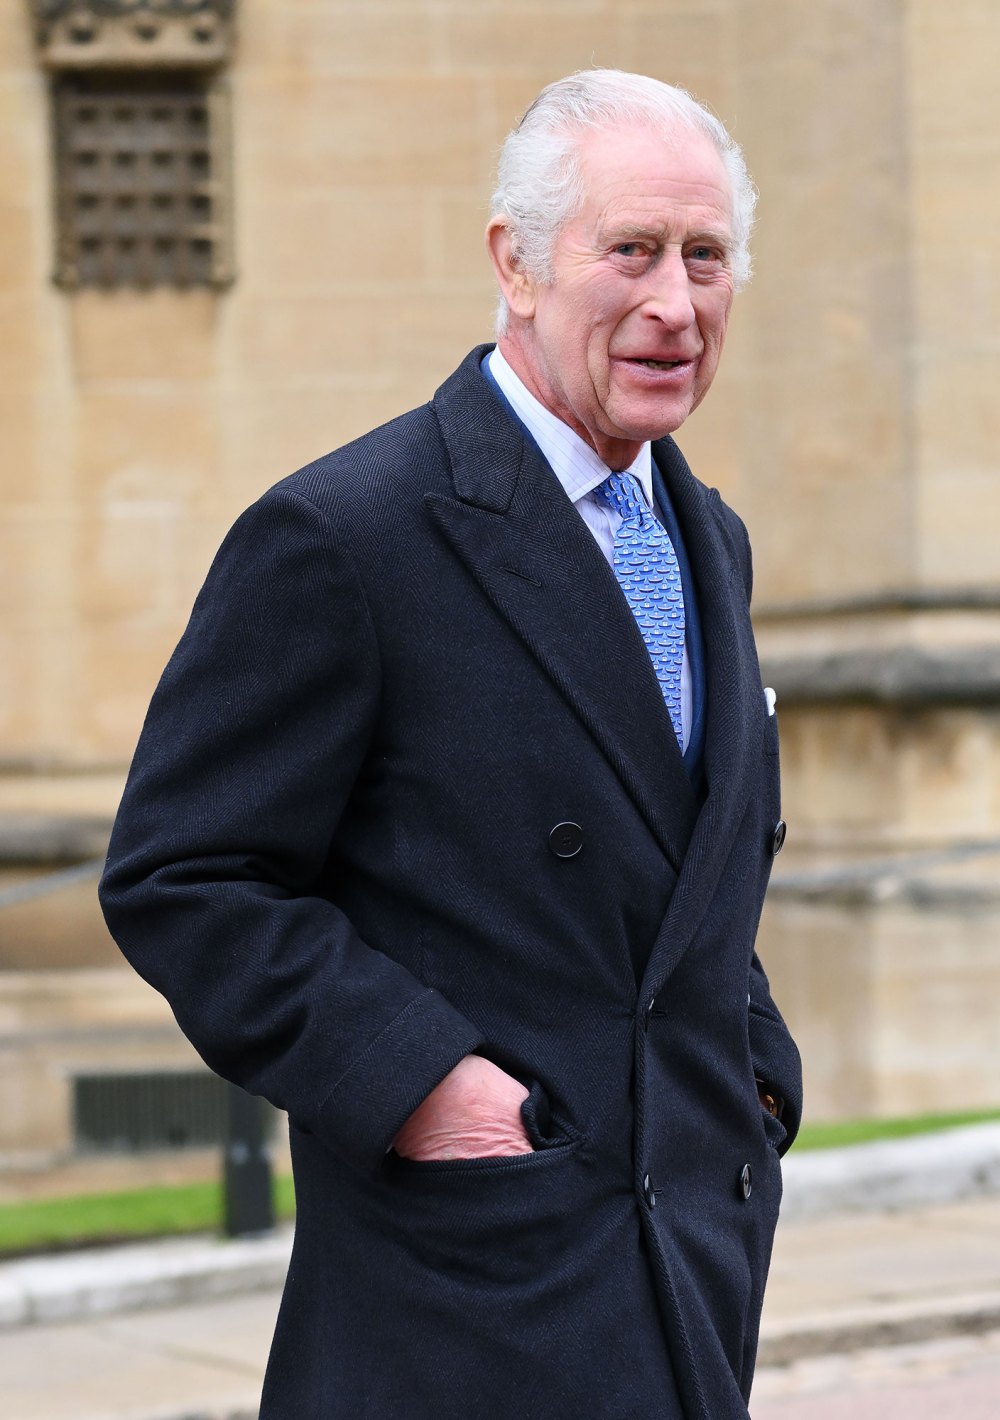 King Charles returns to public duties